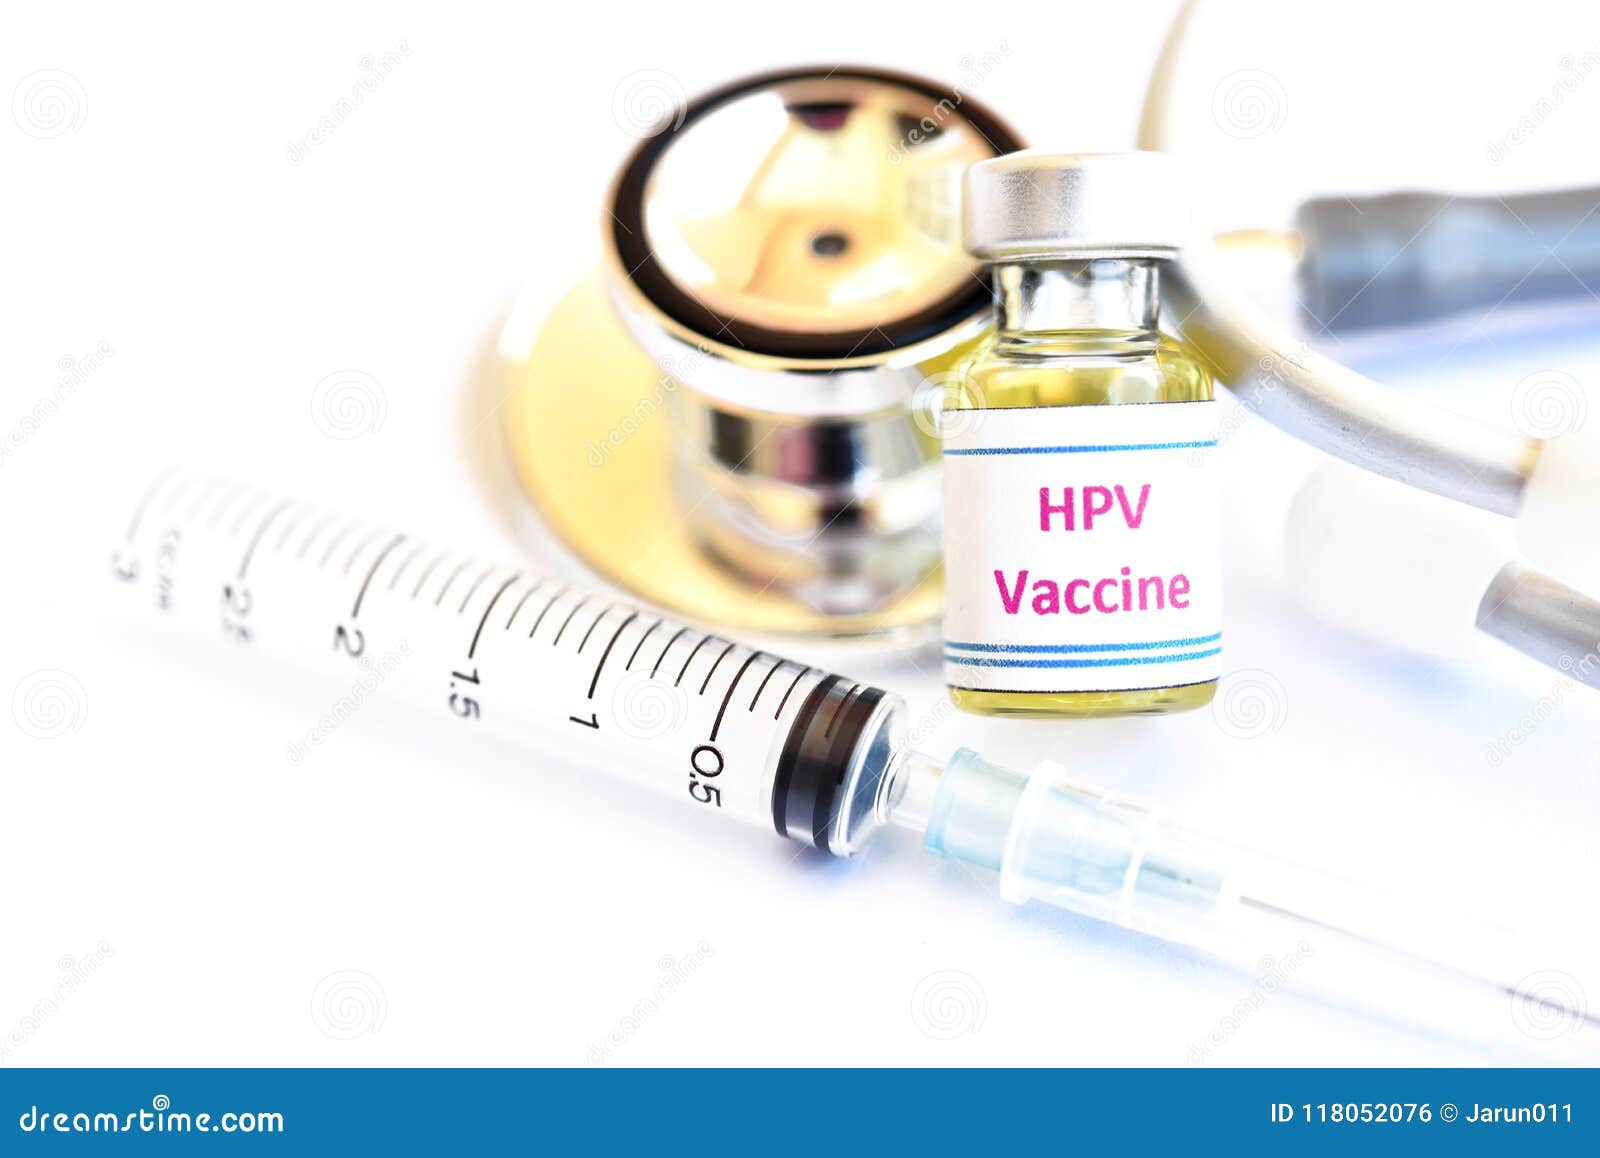 hpv vaccine medicine)